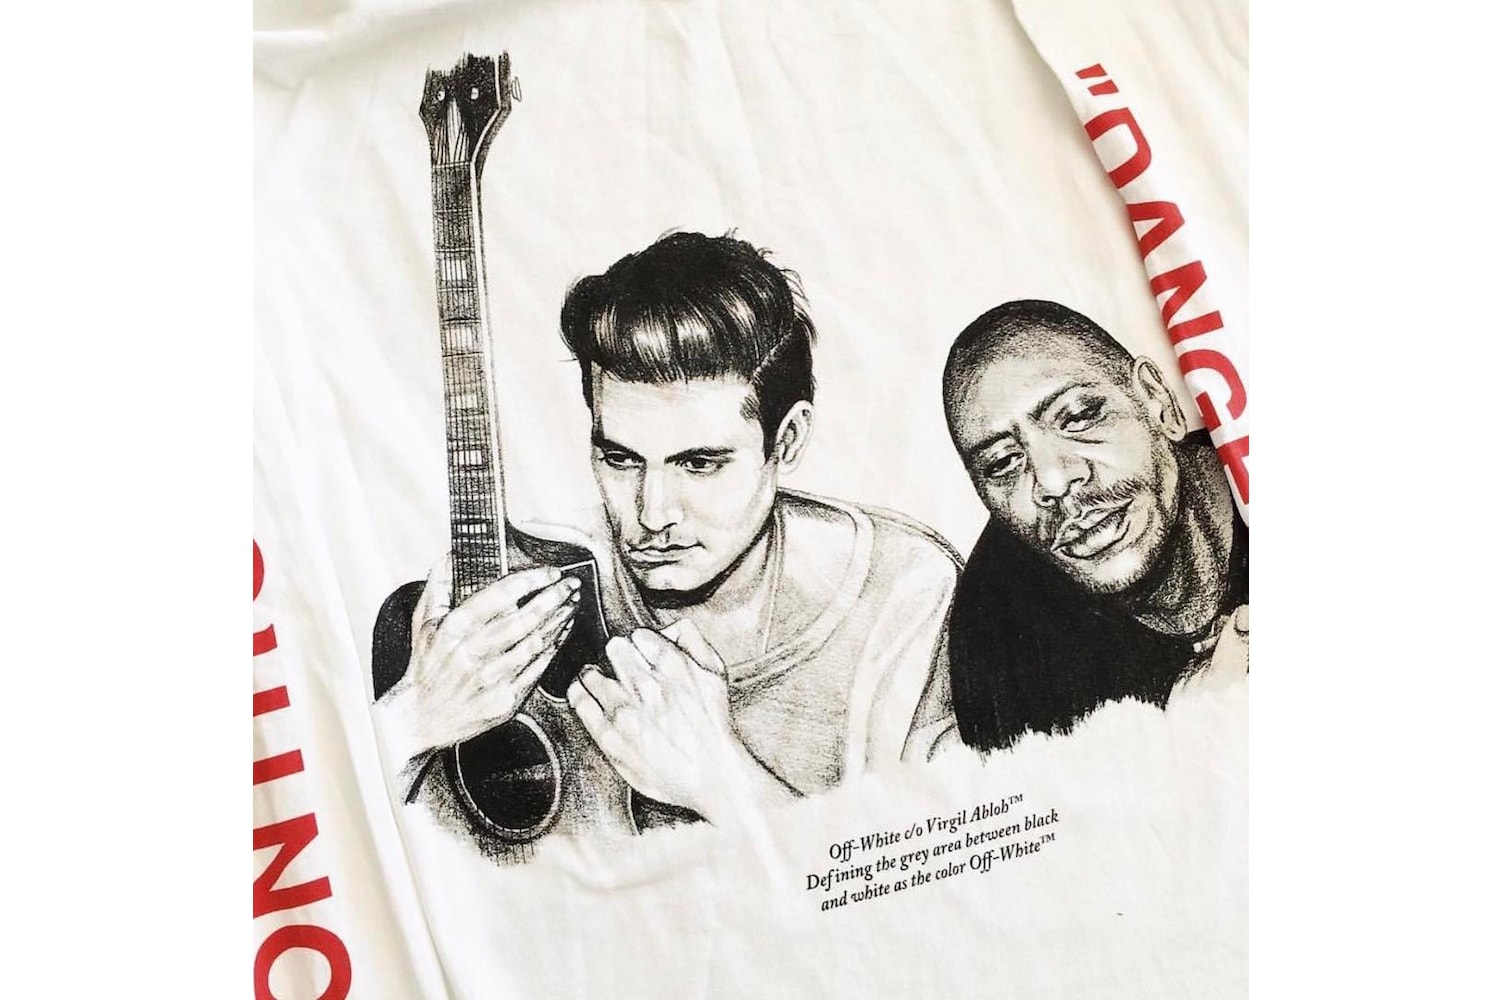 OFF-WHITE John Mayer & Dave Chappelle “CONTROLLED DANGER” T-Shirt